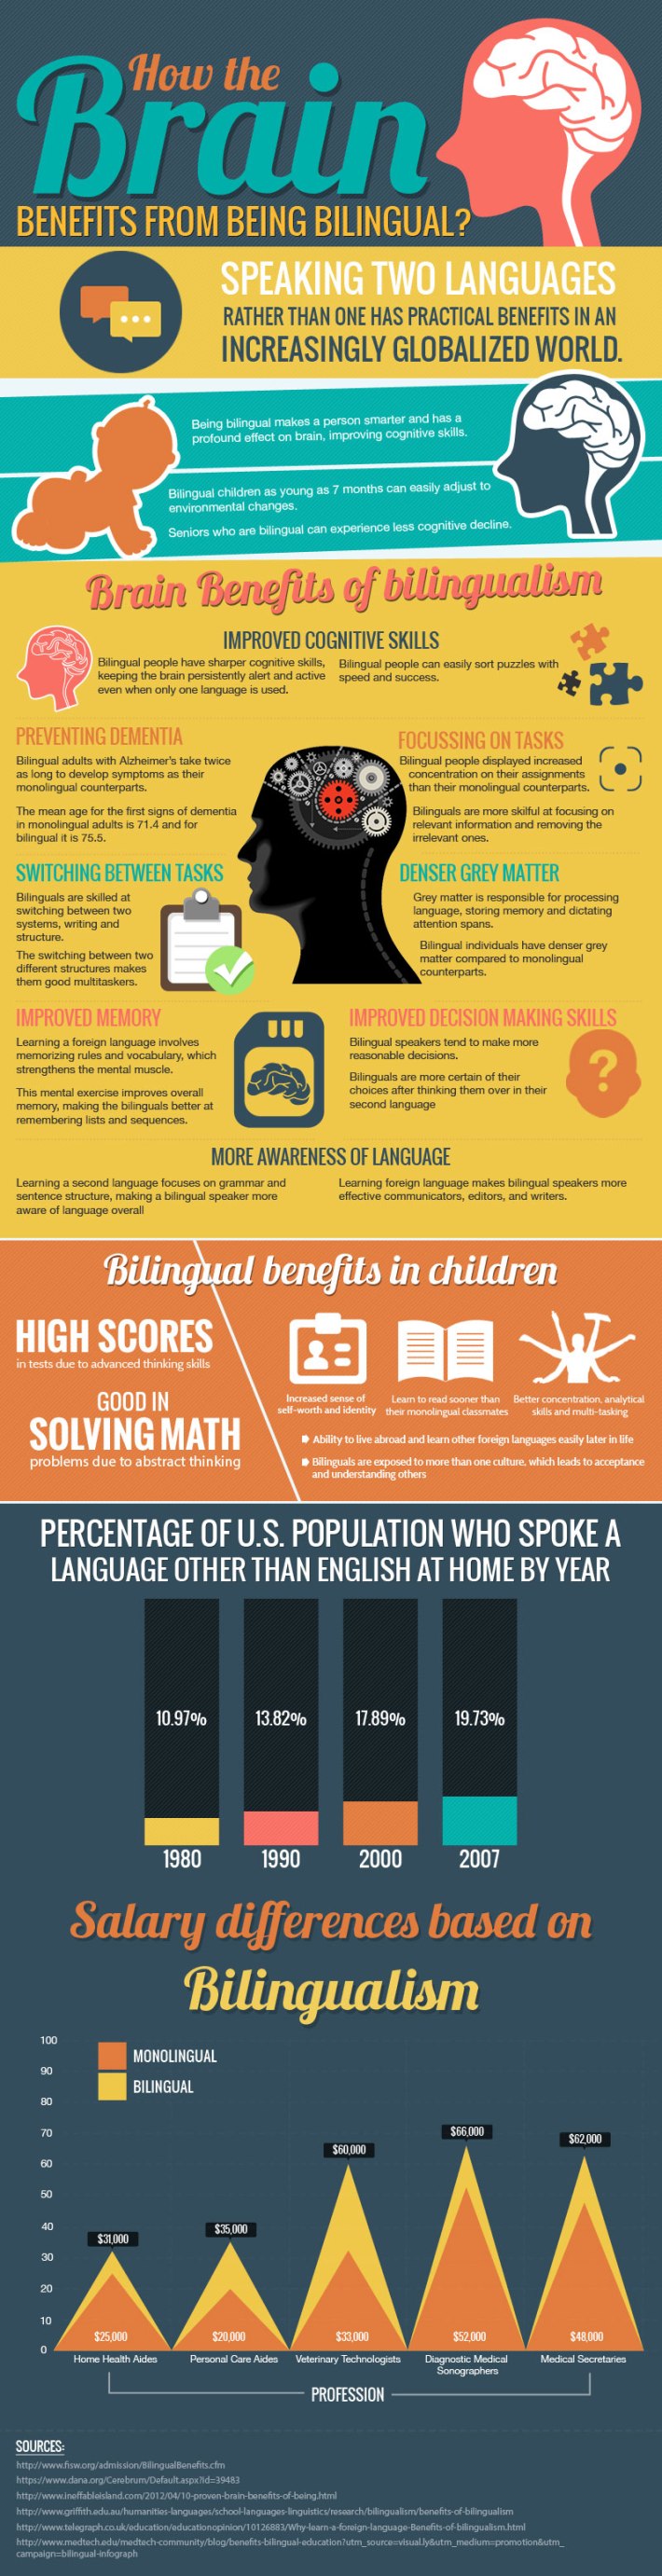 info graphic on bilingual